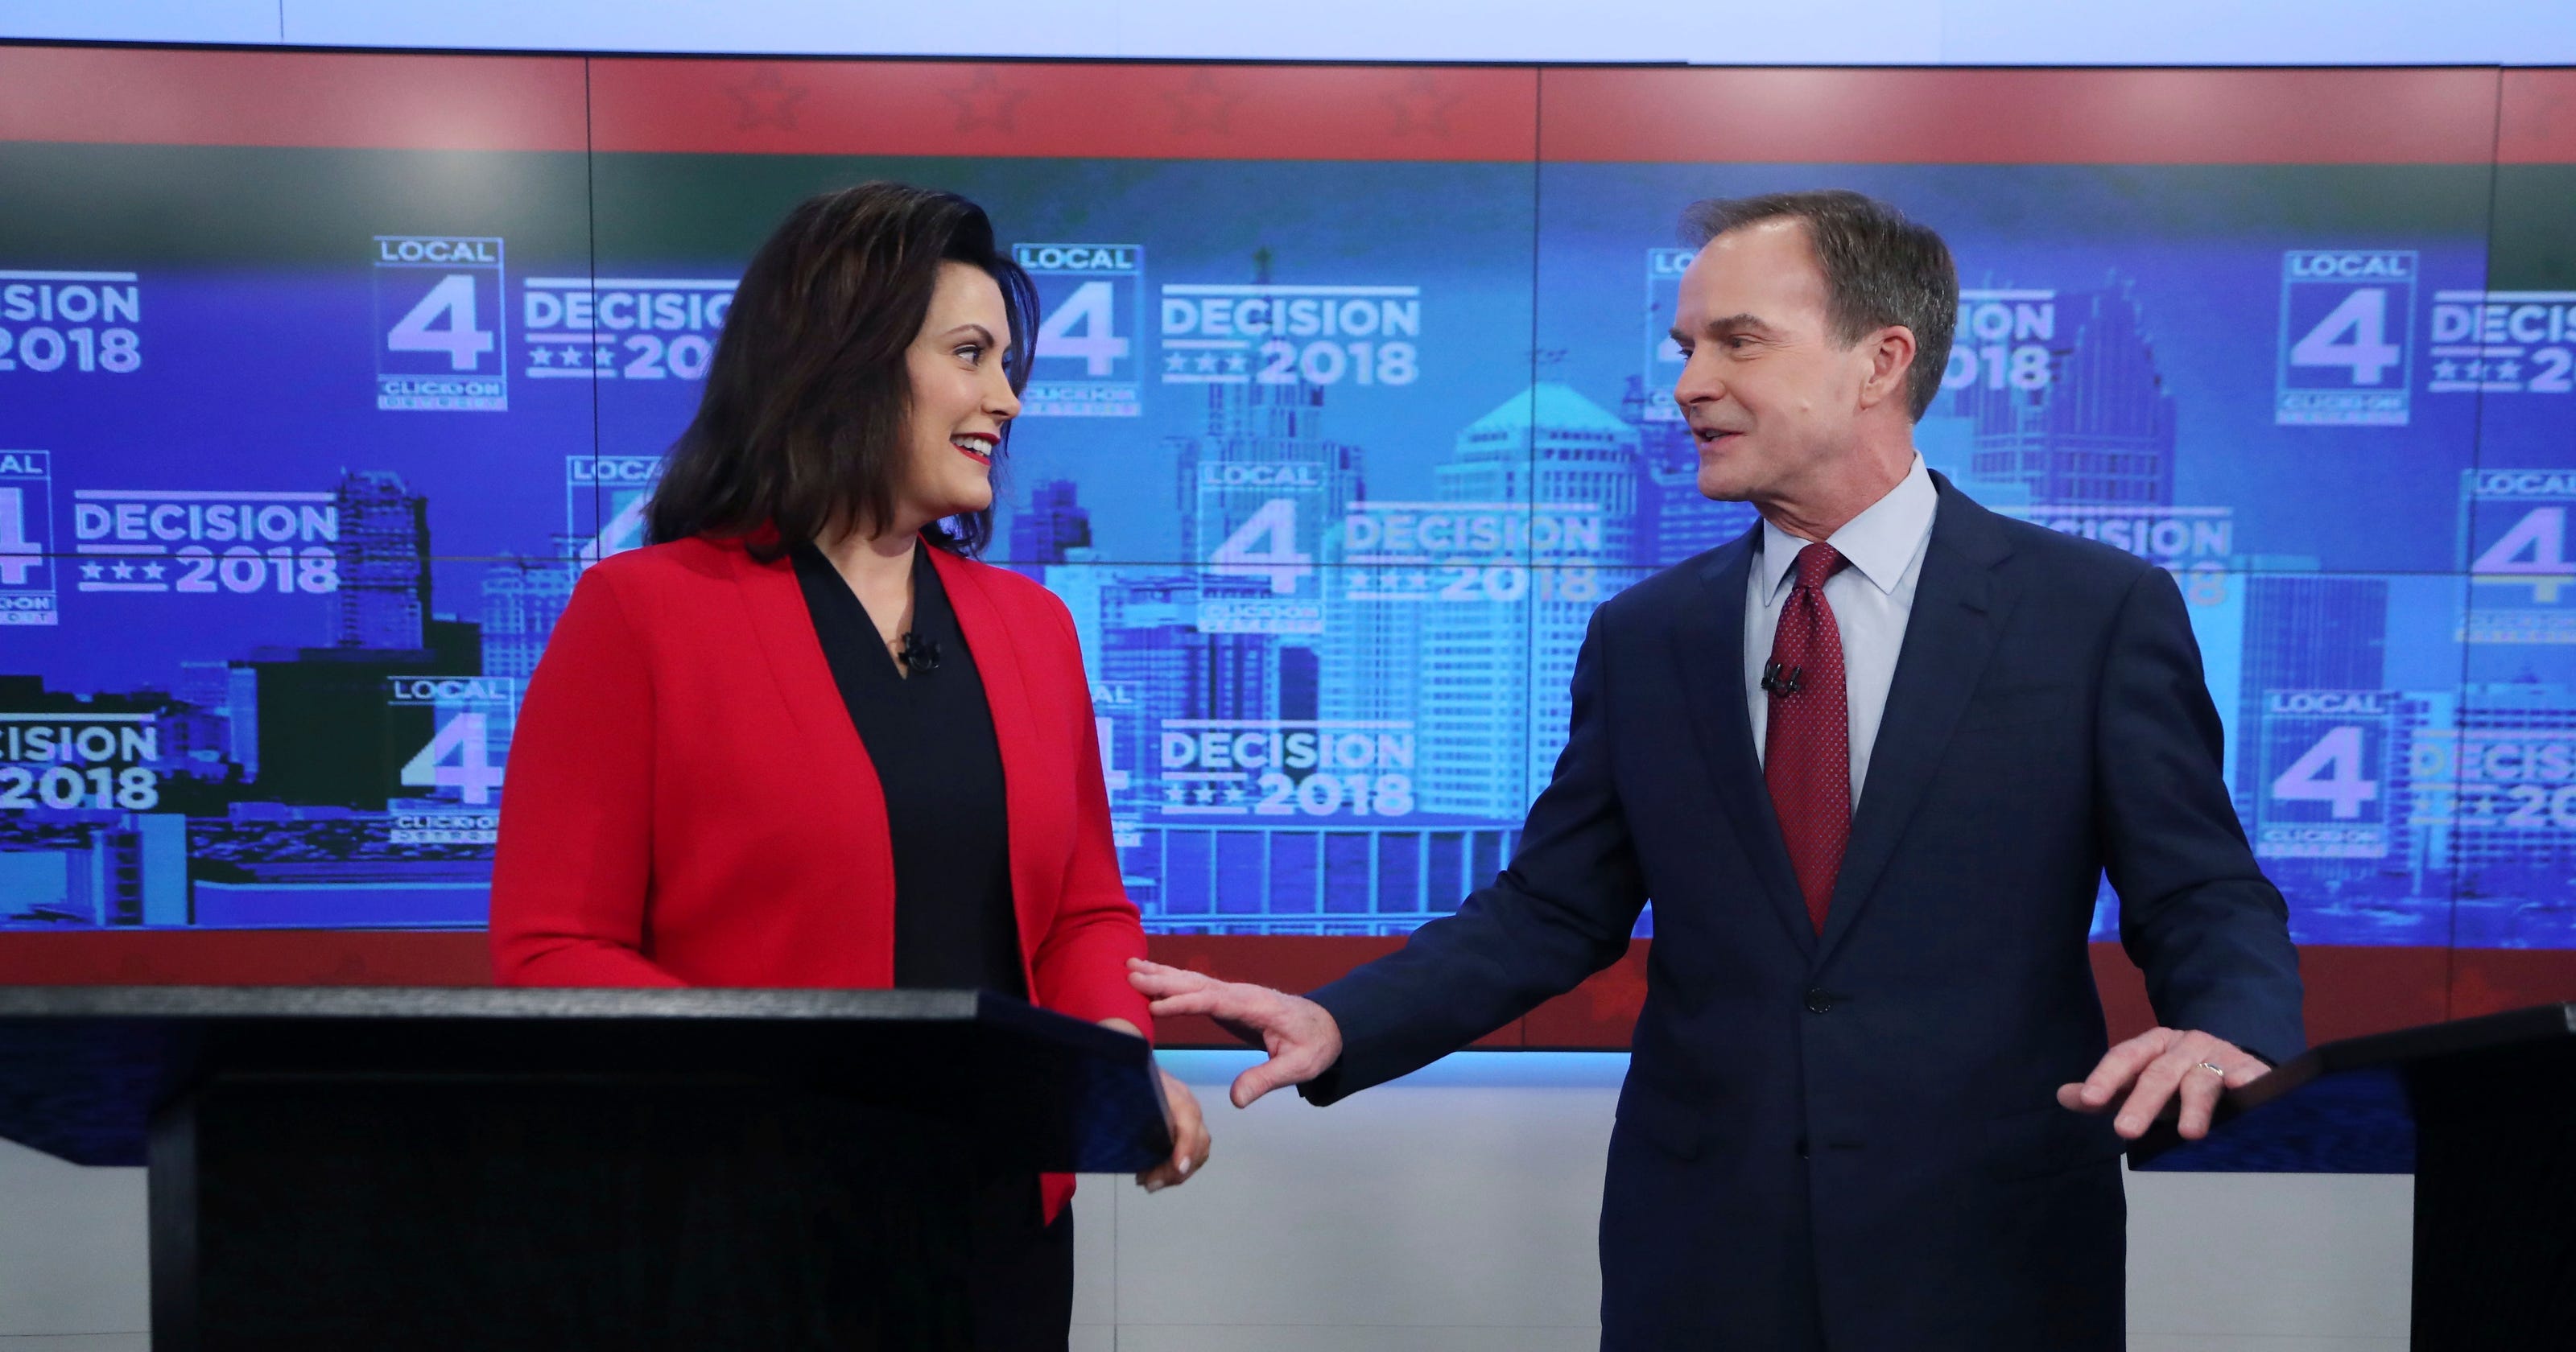 Schuette, Whitmer face off in final Michigan gubernatorial debate